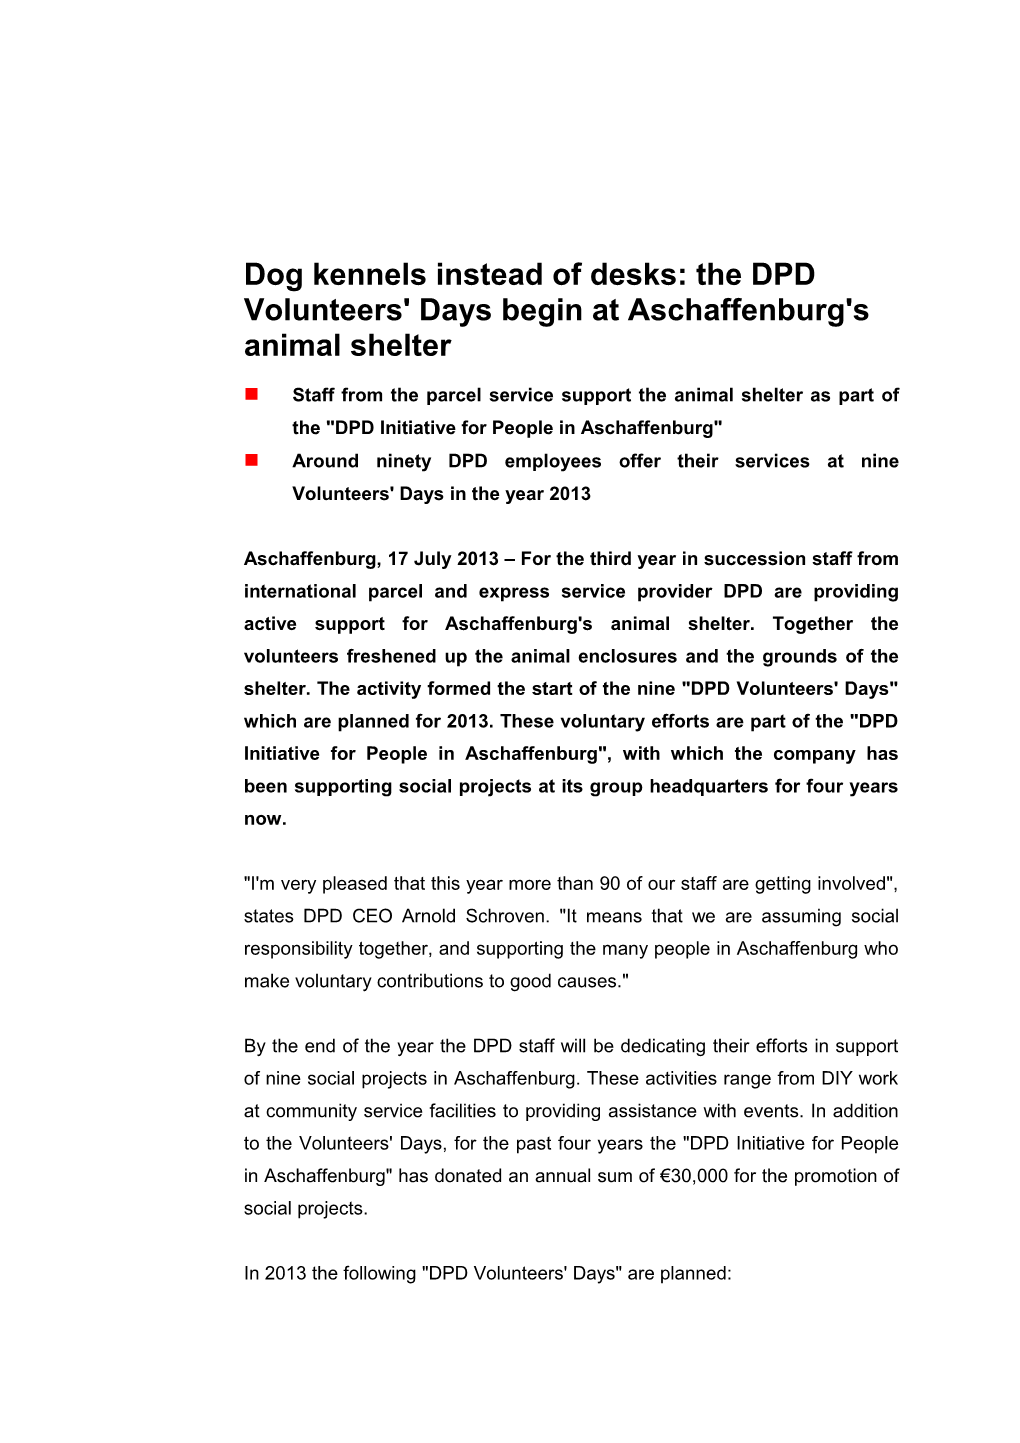 Dog Kennels Instead of Desks: the DPD Volunteers' Daysbegin at Aschaffenburg's Animal Shelter